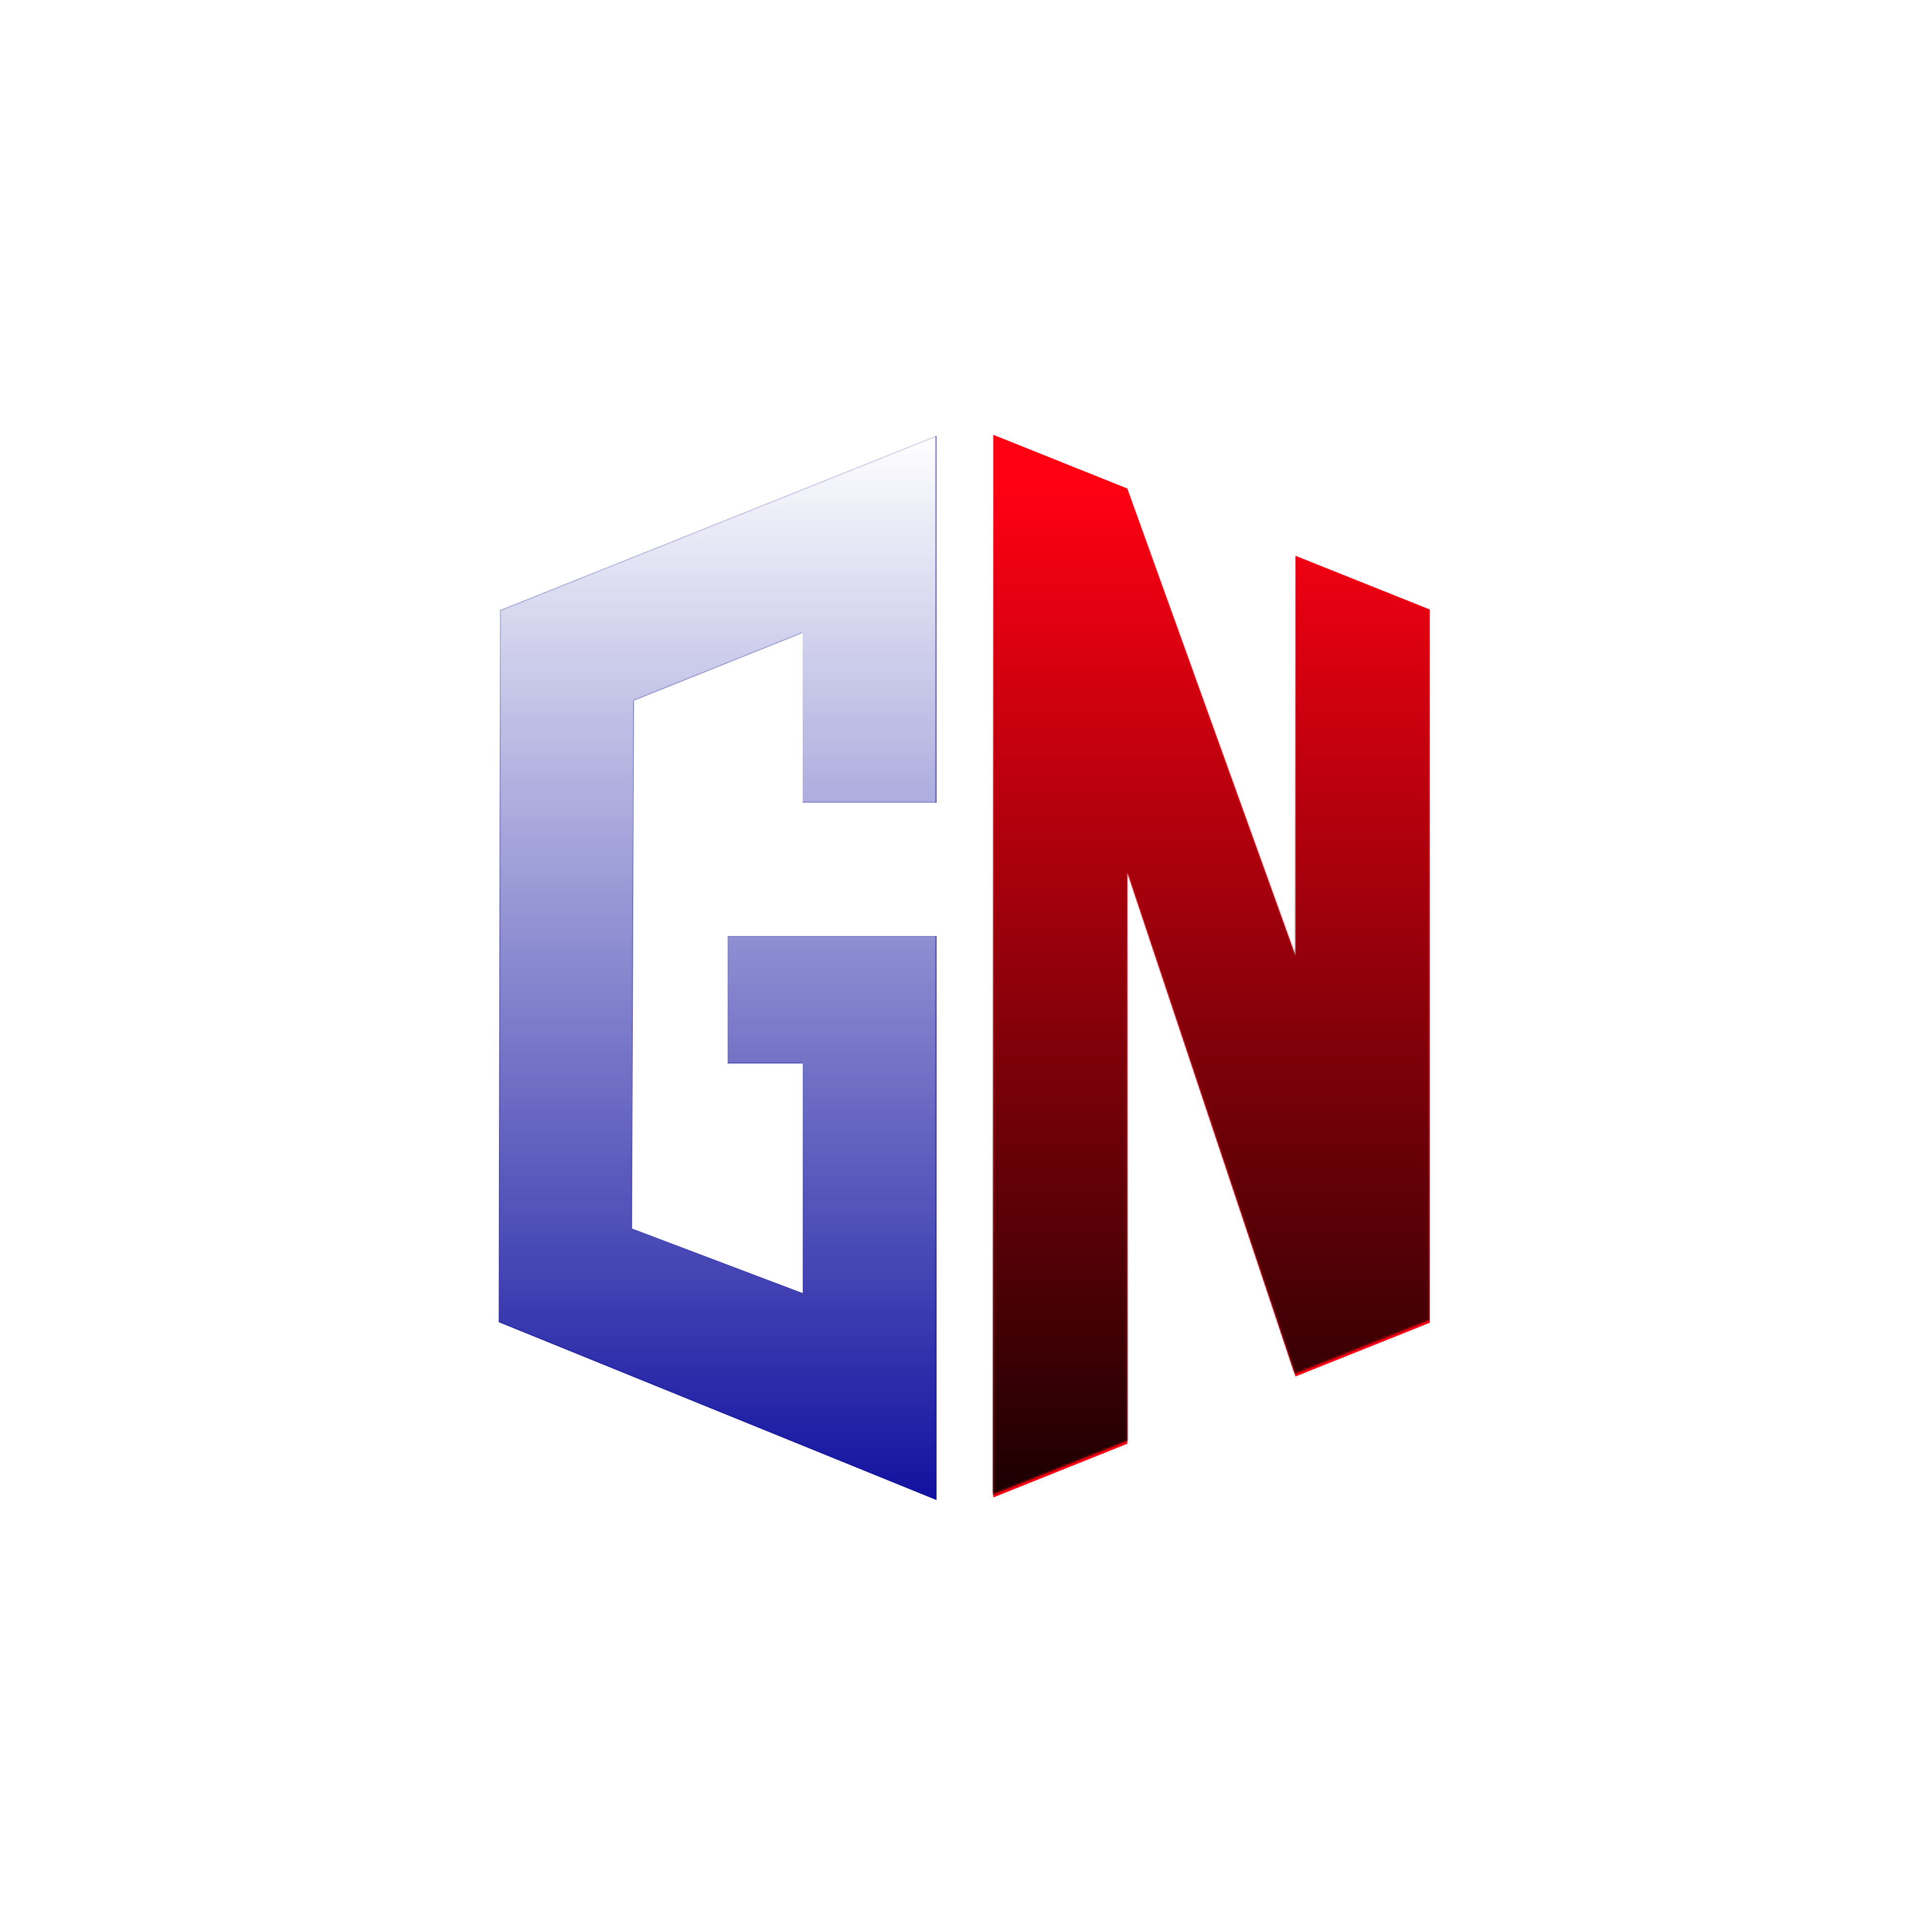 Grim Night